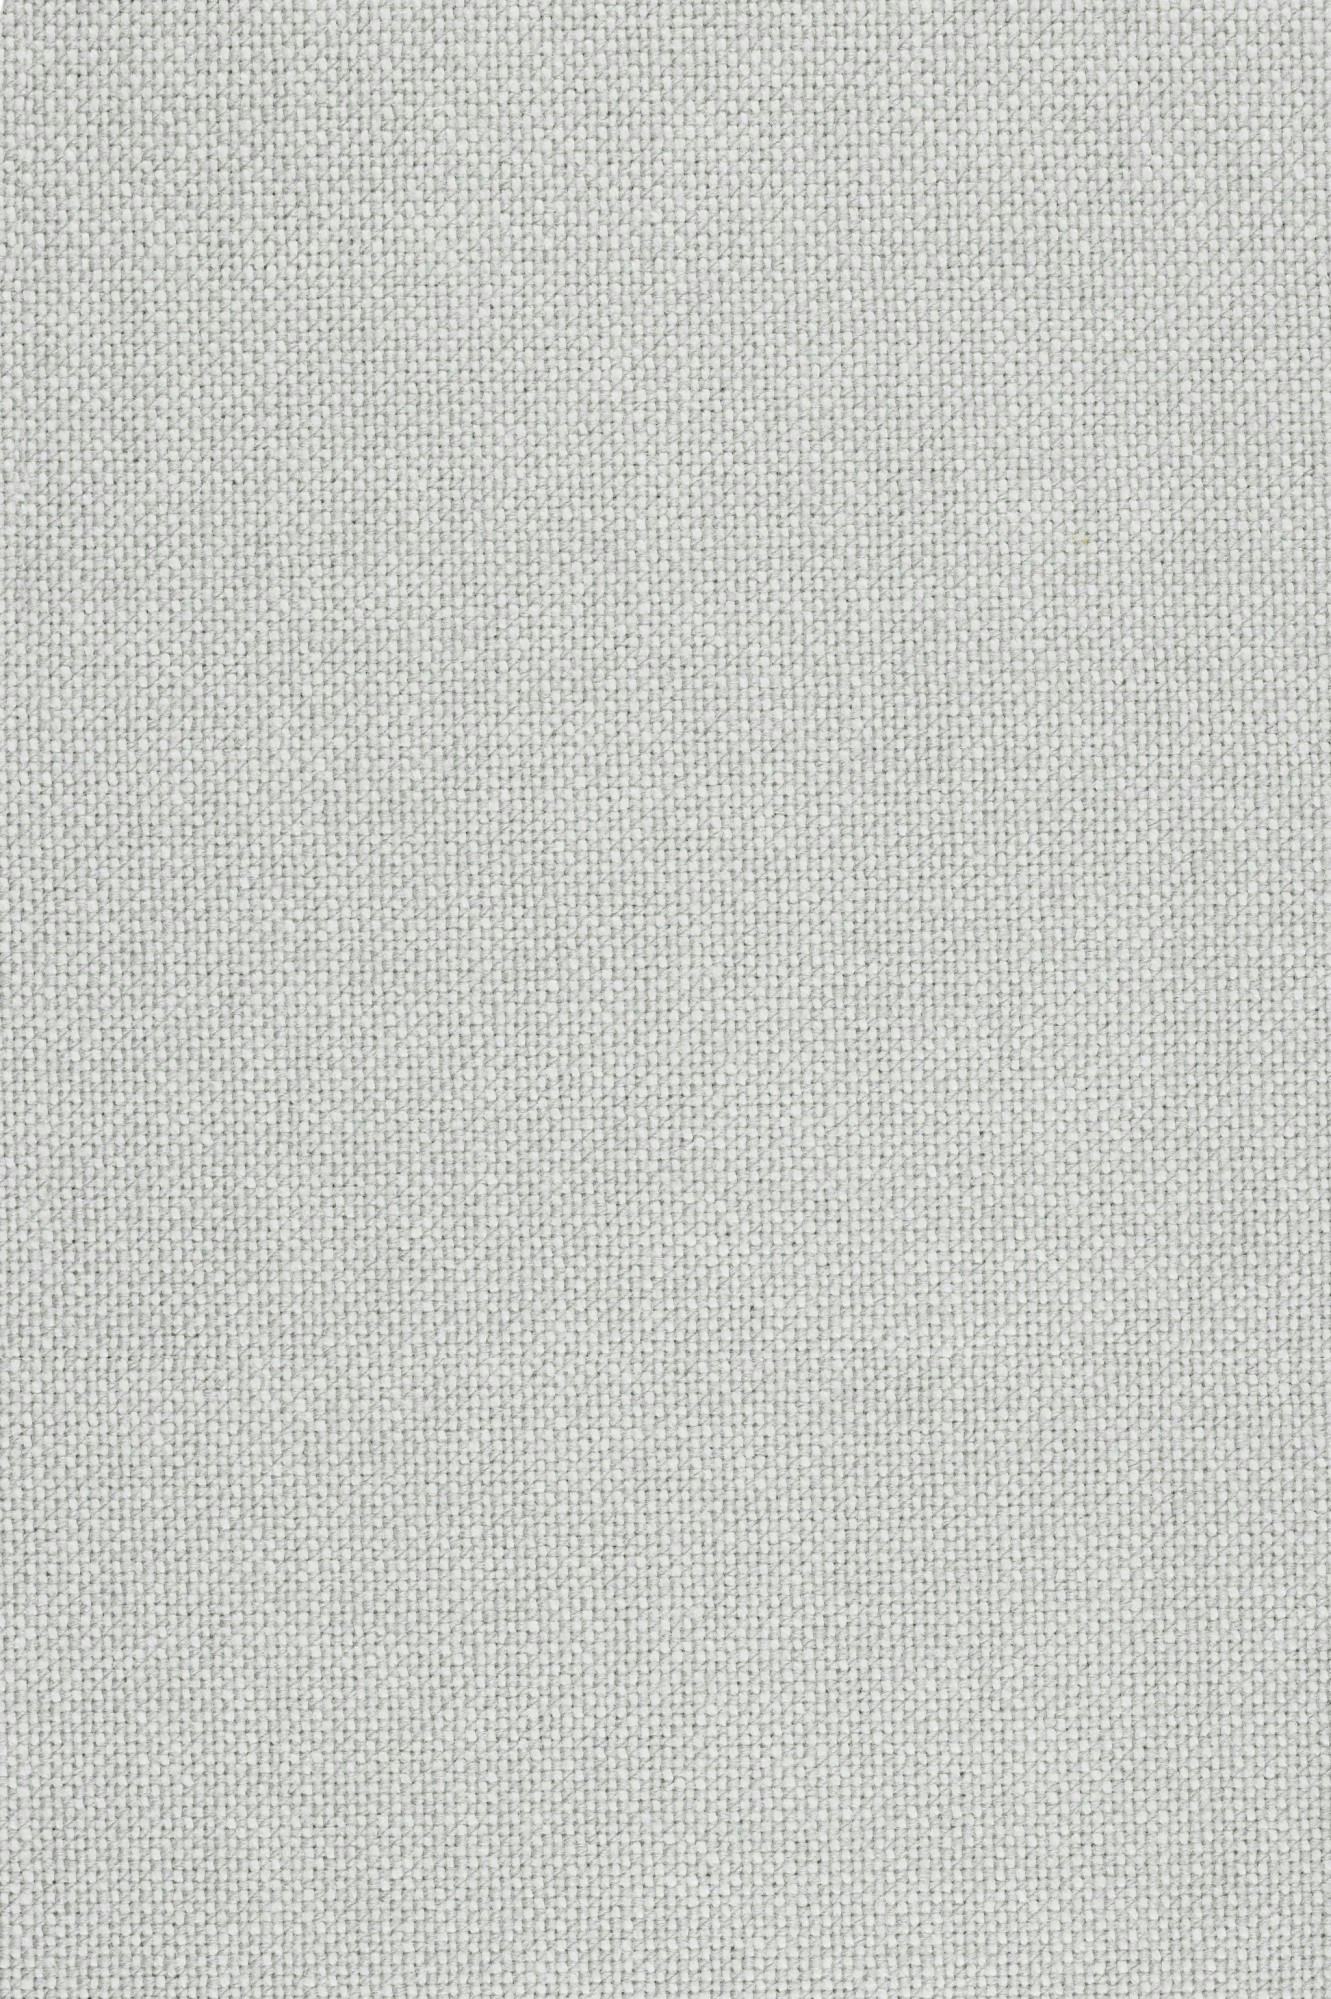 Fabric sample Hallingdal 65 103 grey